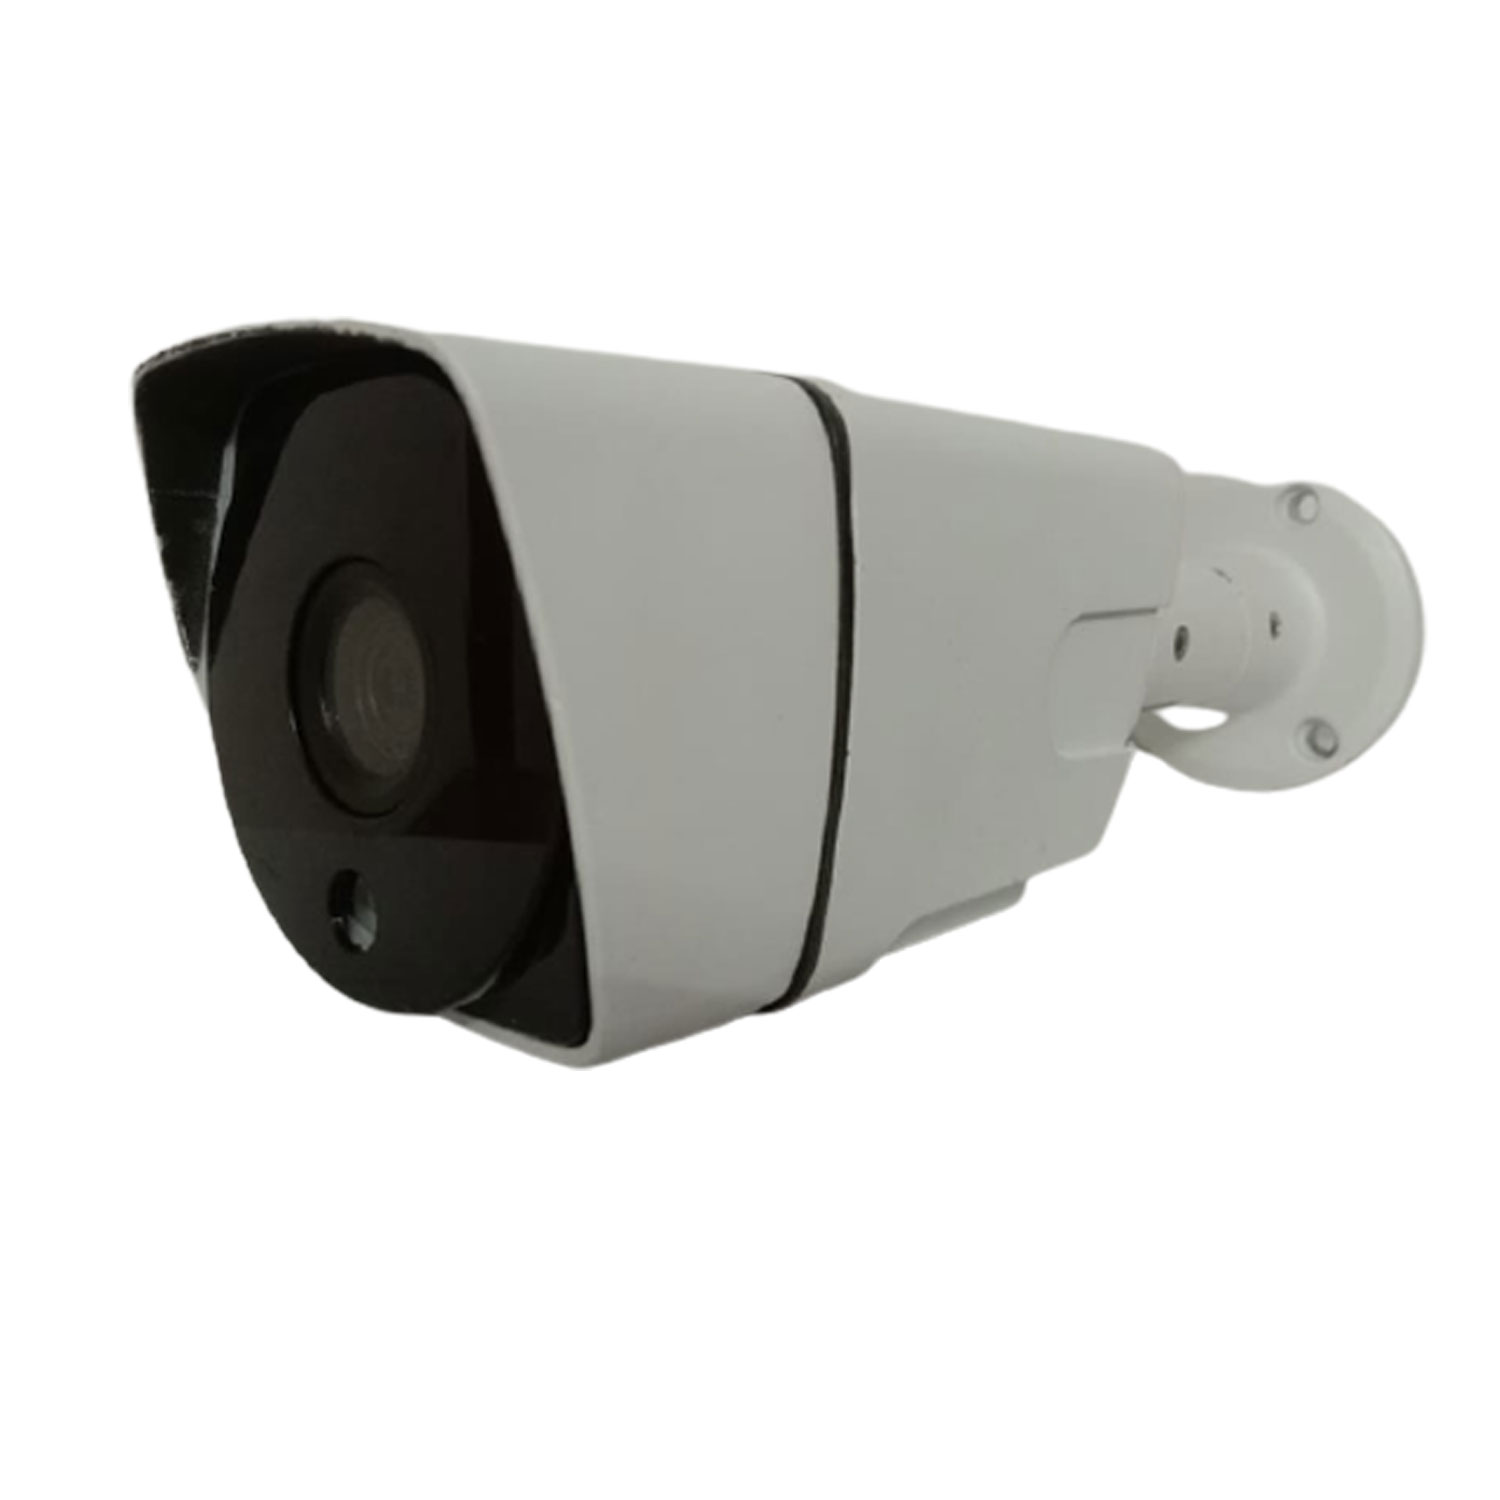 ZONTECH 5MP IP POE METAL BULLET CCTV